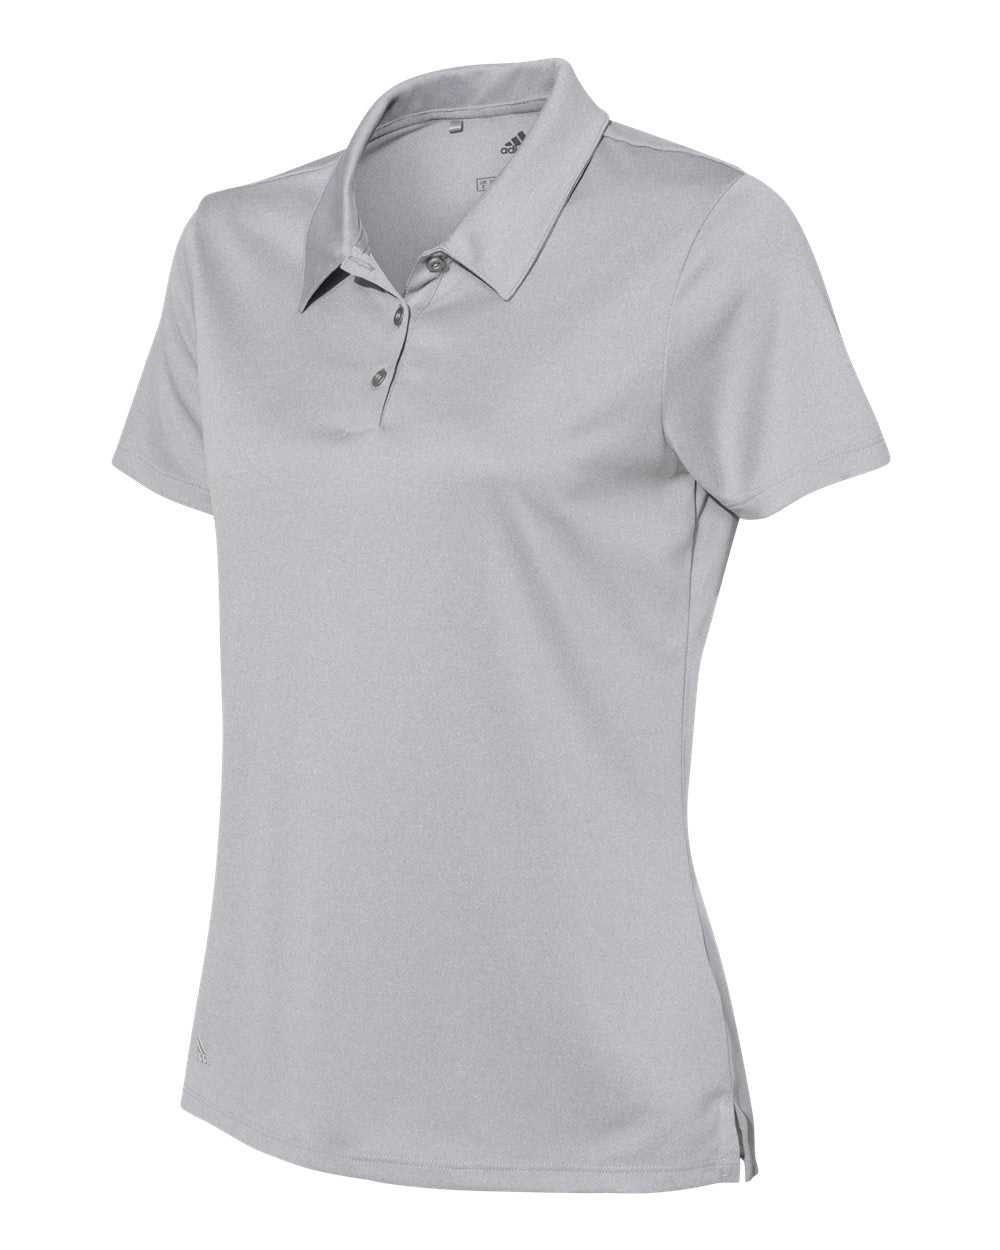 Adidas A241 Women's Heathered Sport Shirt - Mid Grey Melange - HIT a Double